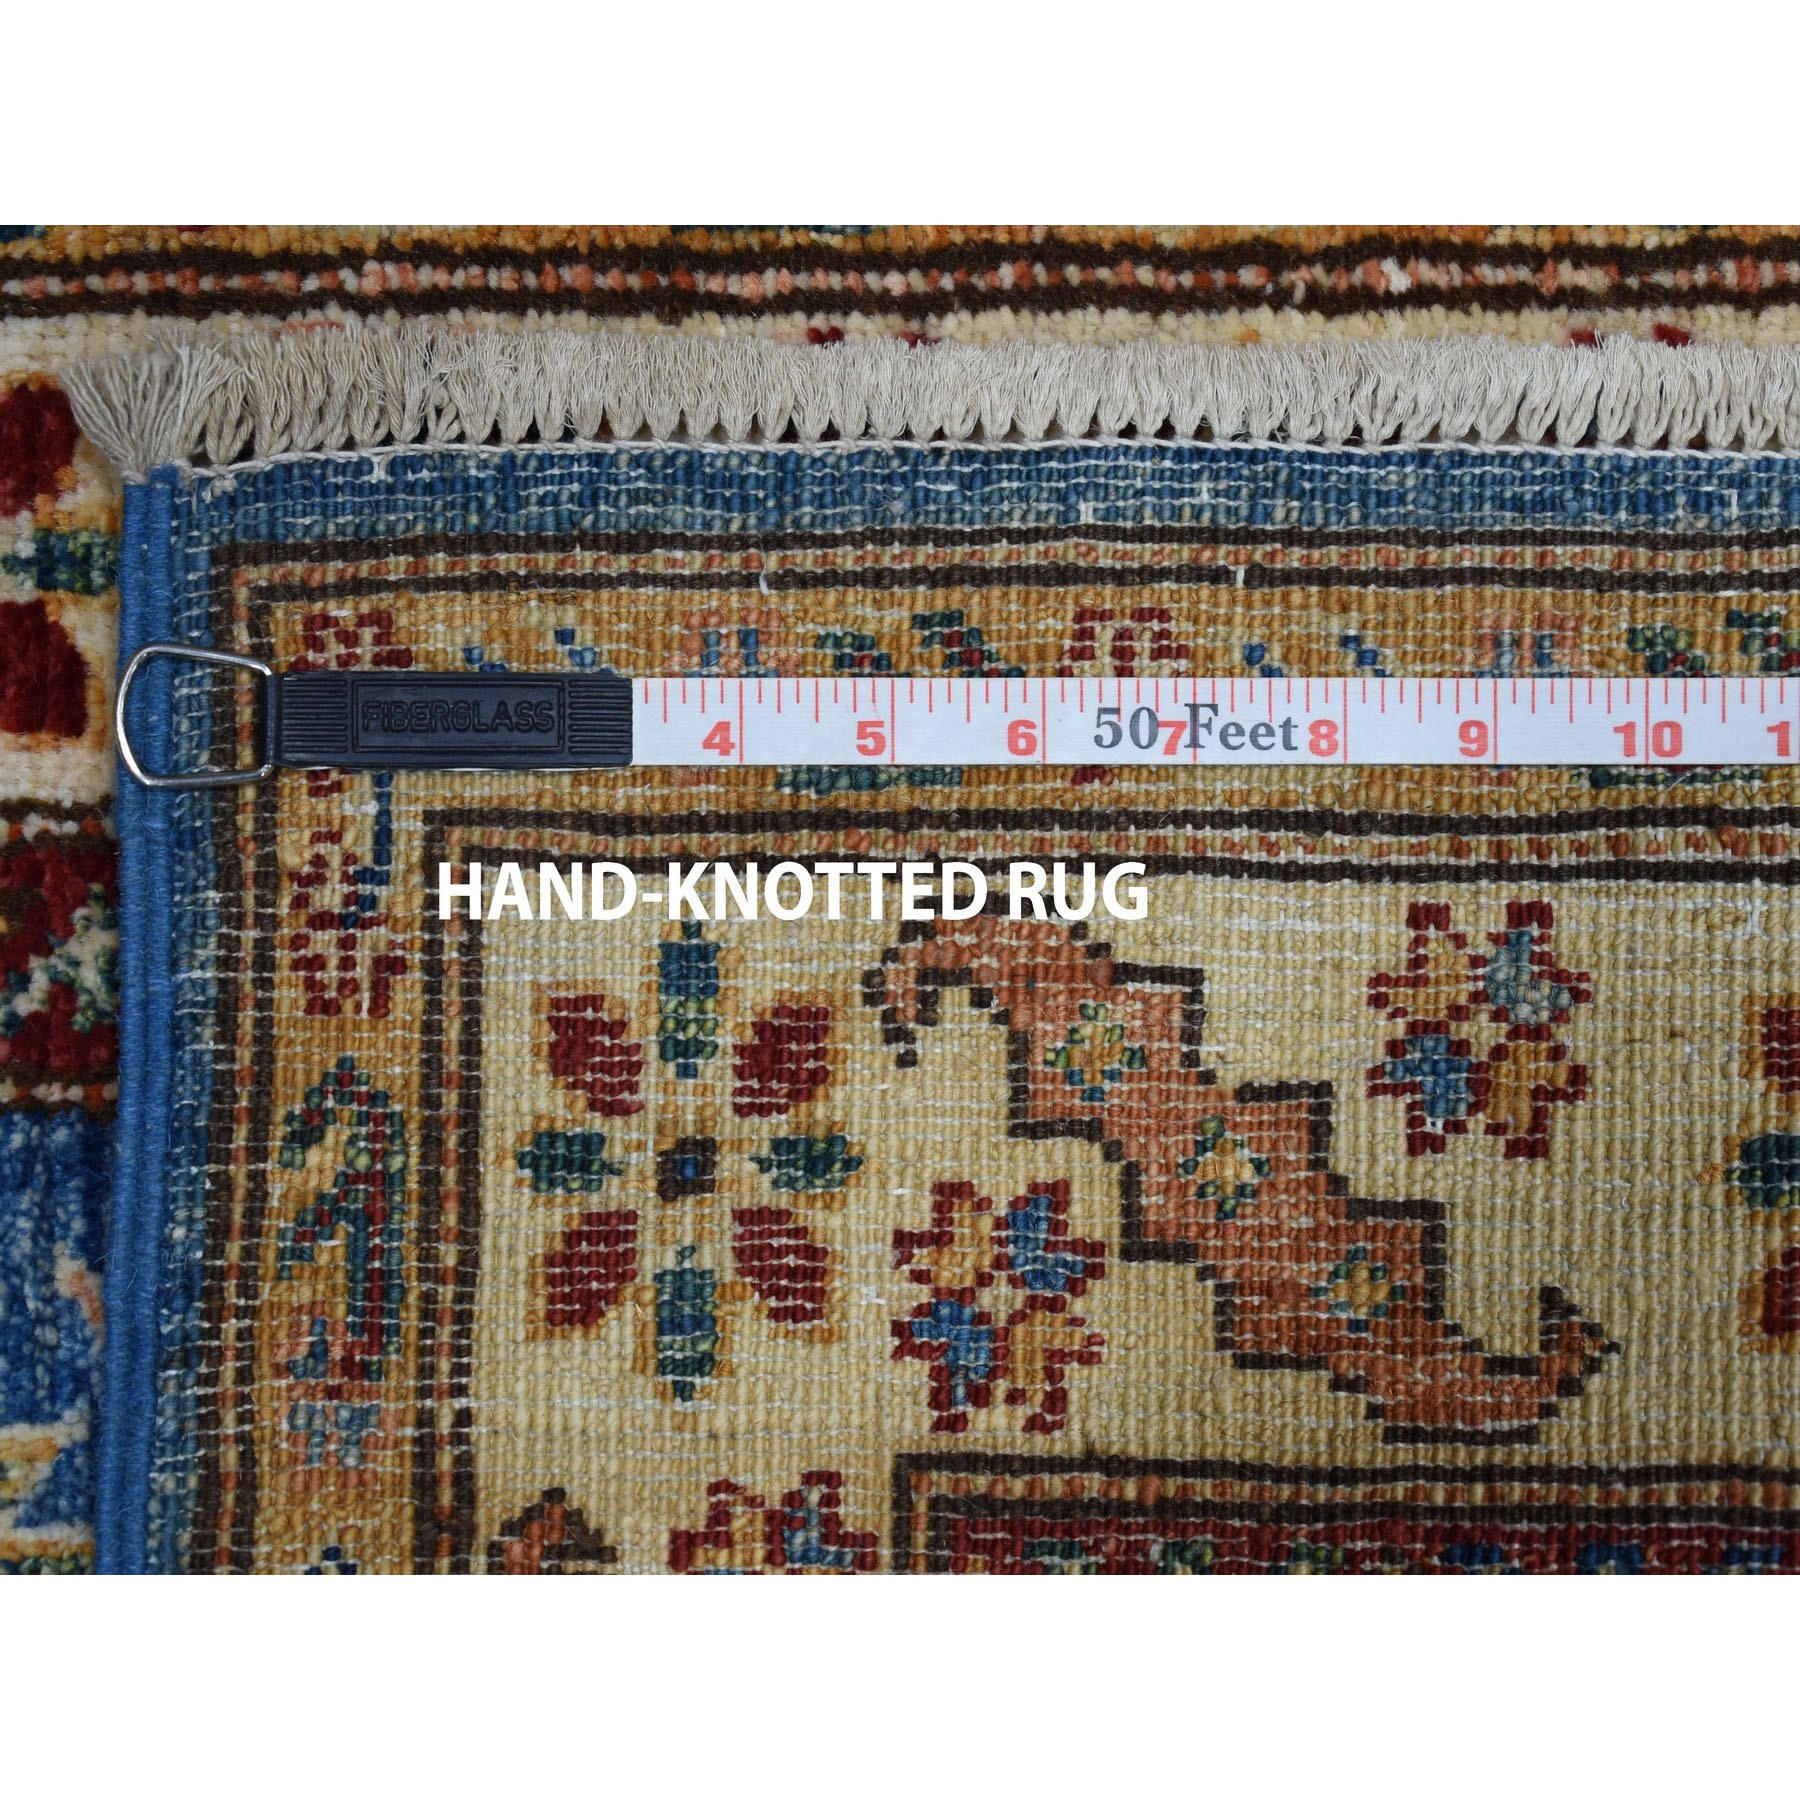 2-x3-6  Blue Super Kazak Pure Wool Geometric Design Hand-Knotted Oriental Rug 